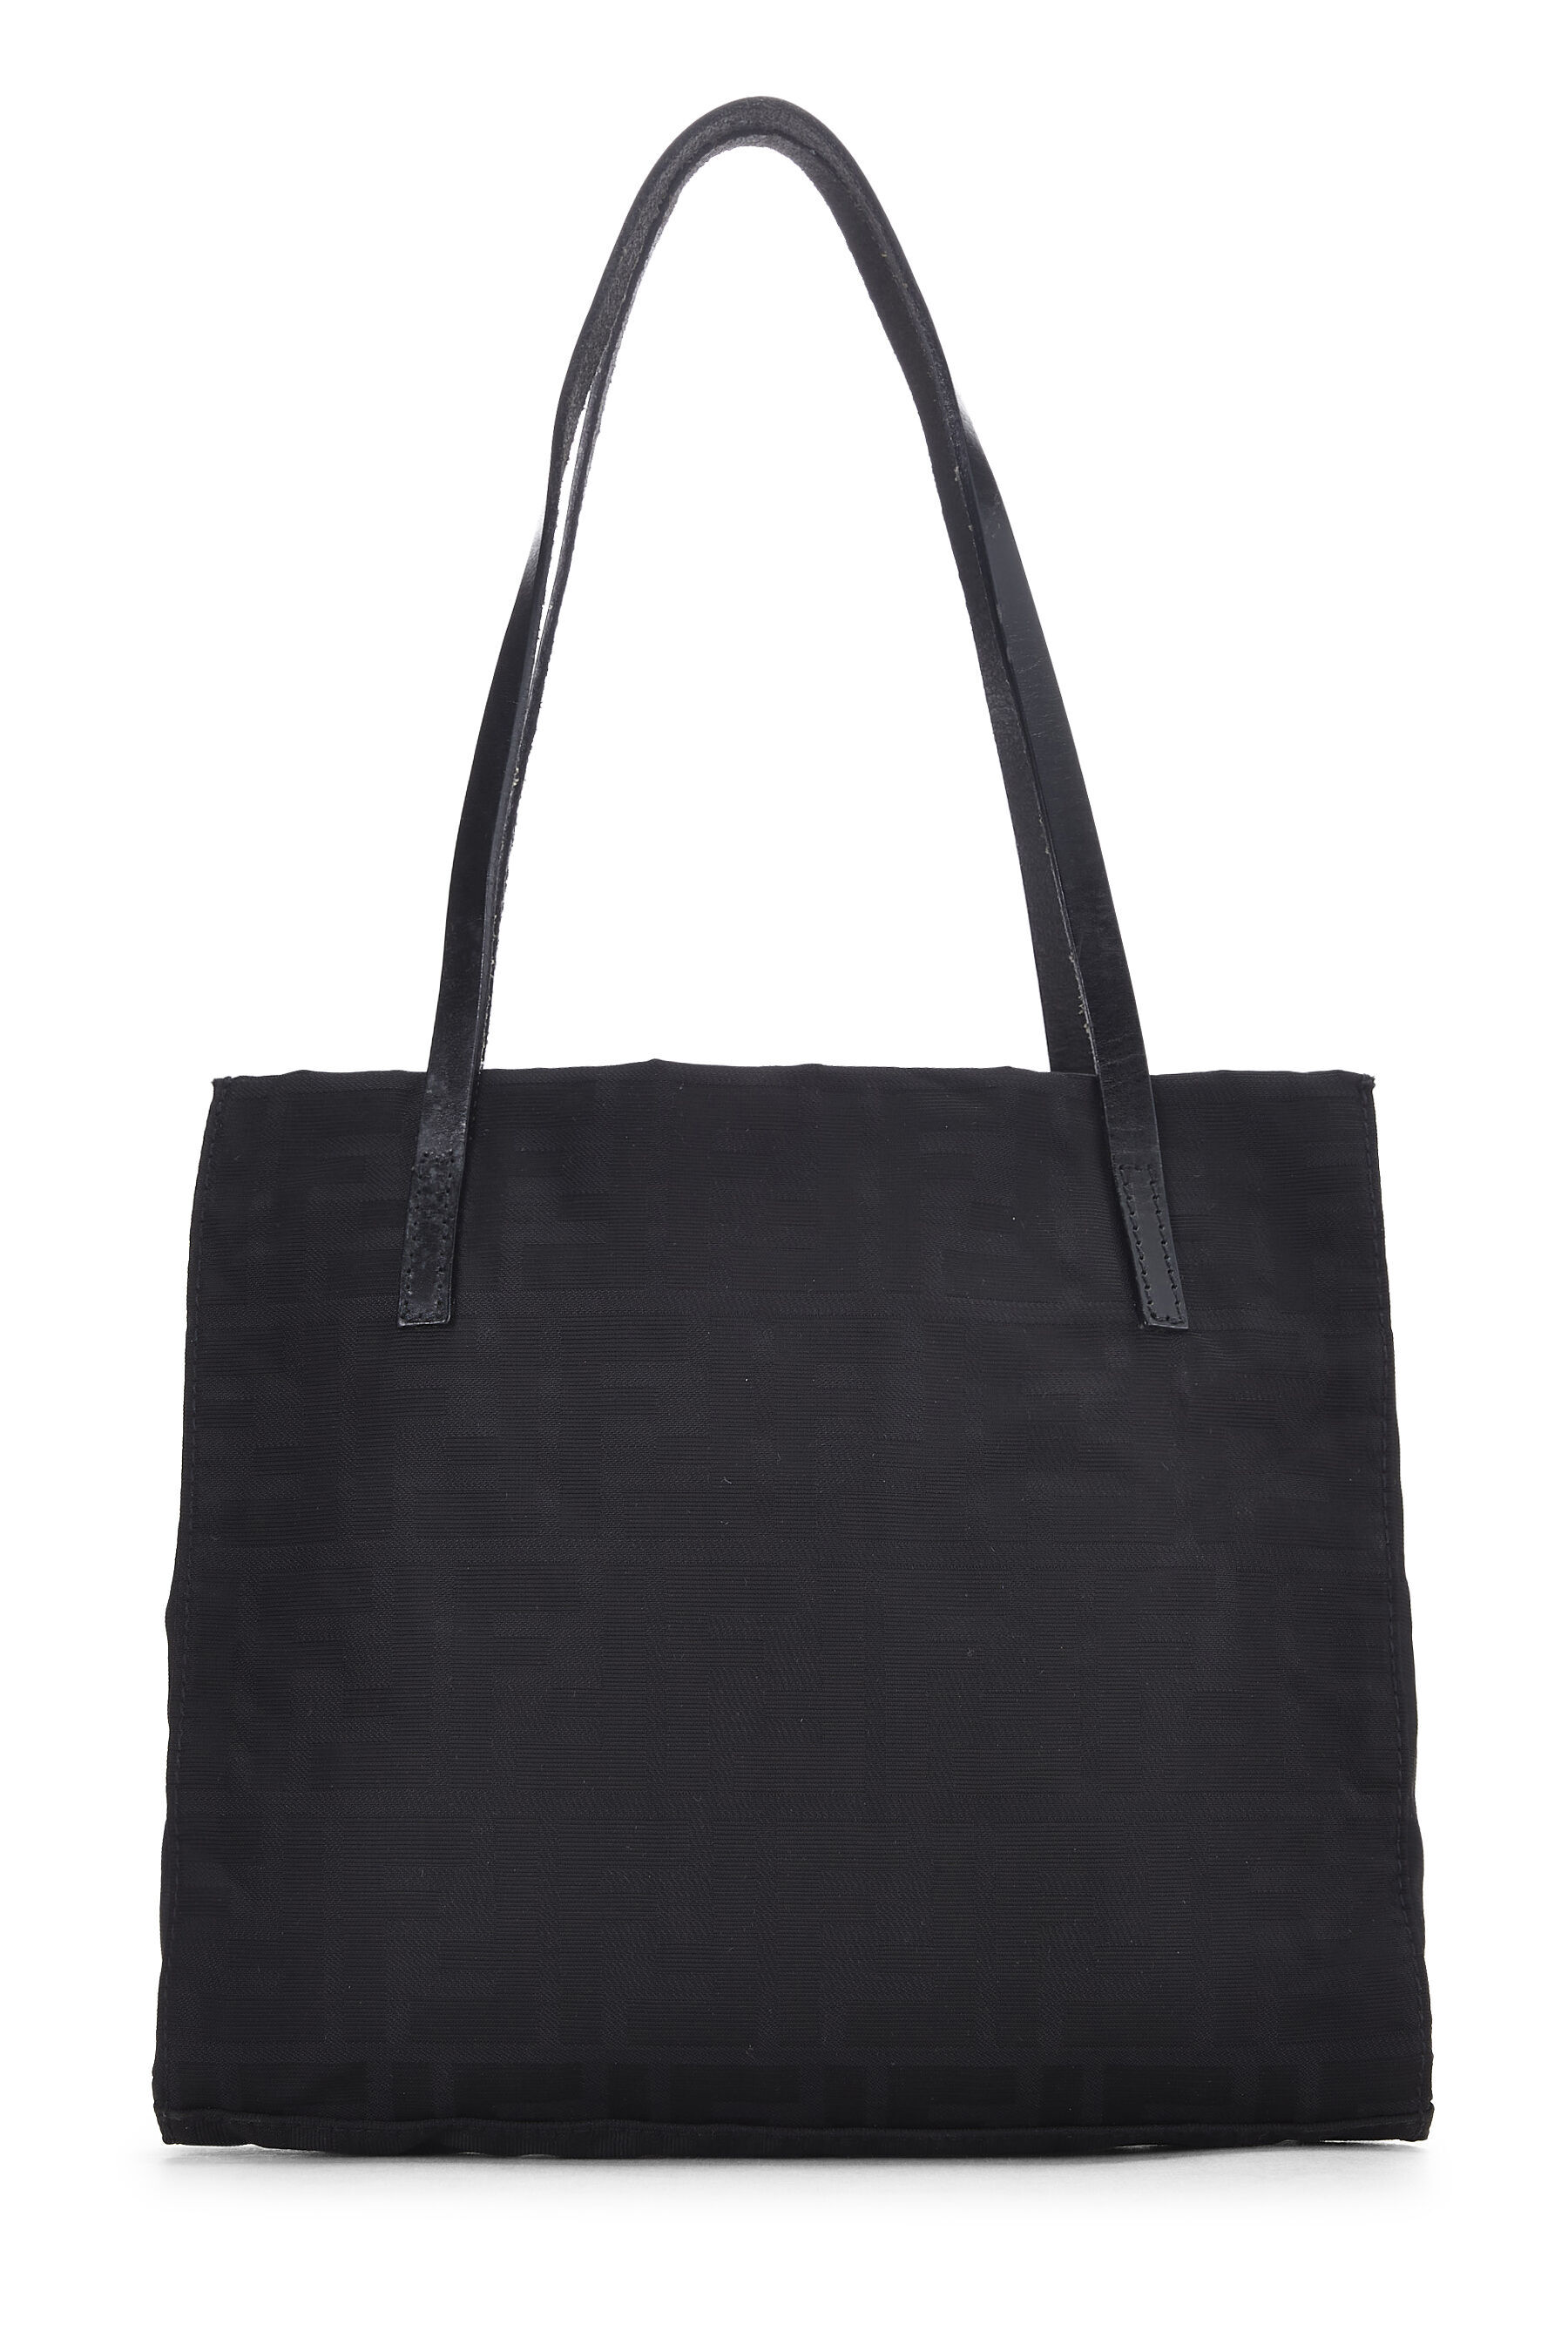 Black Canvas Shoulder Bag With Adjustable Shoulder Straps - PRESTIGE  CREATIONS FACTORY | CUSTOM BAGS - CUSTOM PACKAGING BOXES - HOTEL AMENITIES